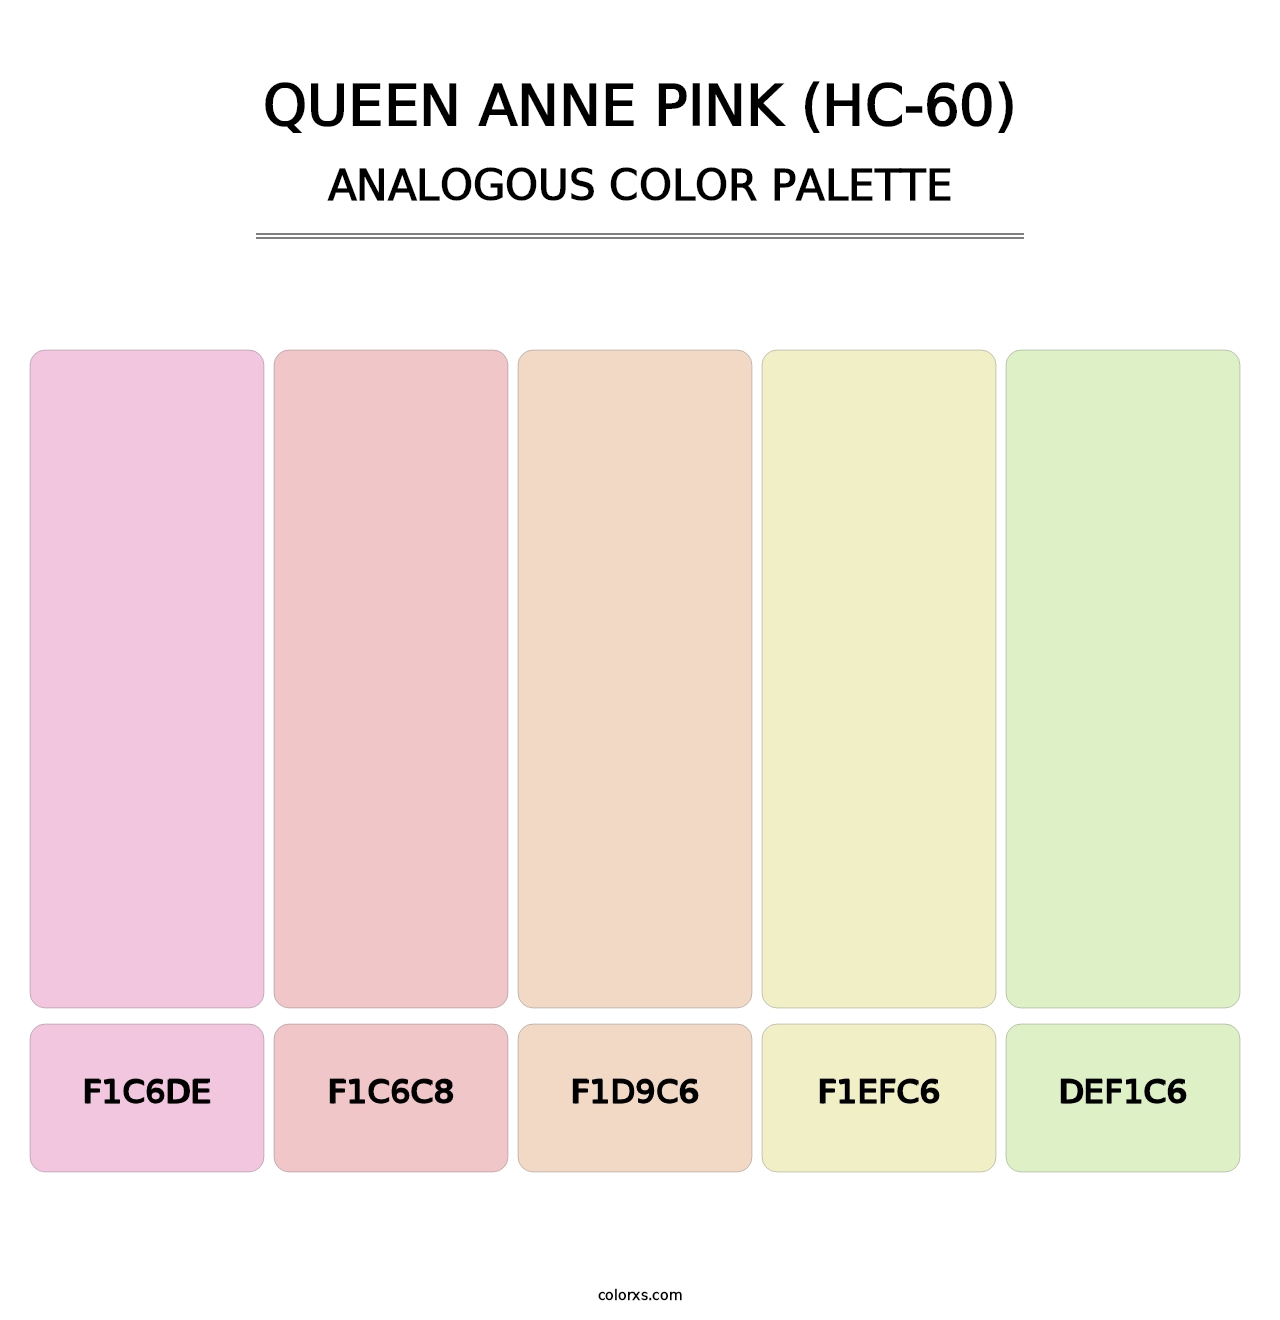 Queen Anne Pink (HC-60) - Analogous Color Palette